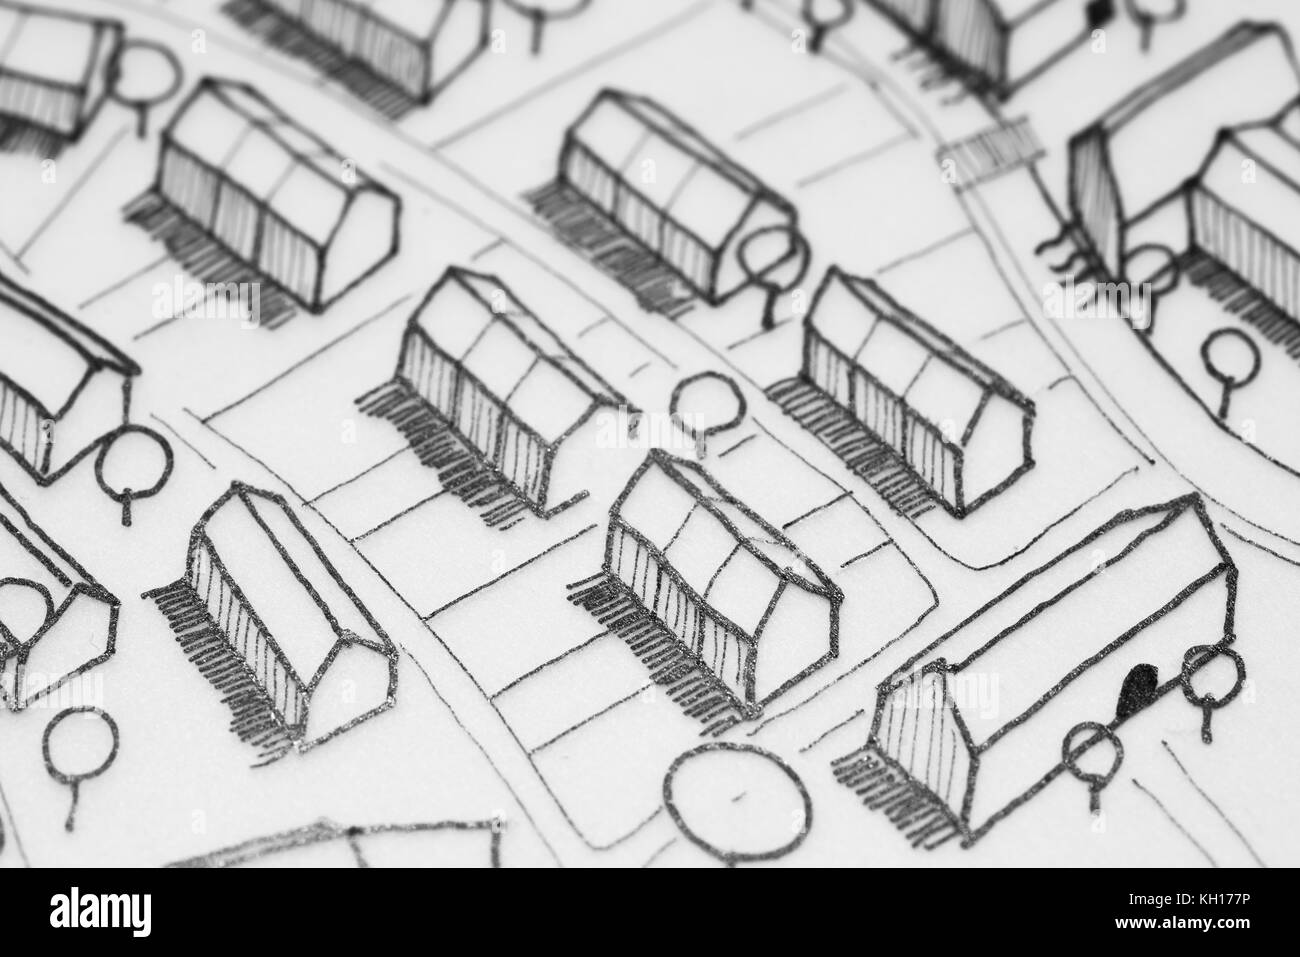 Urban Planning Concept Idea Stock Photo